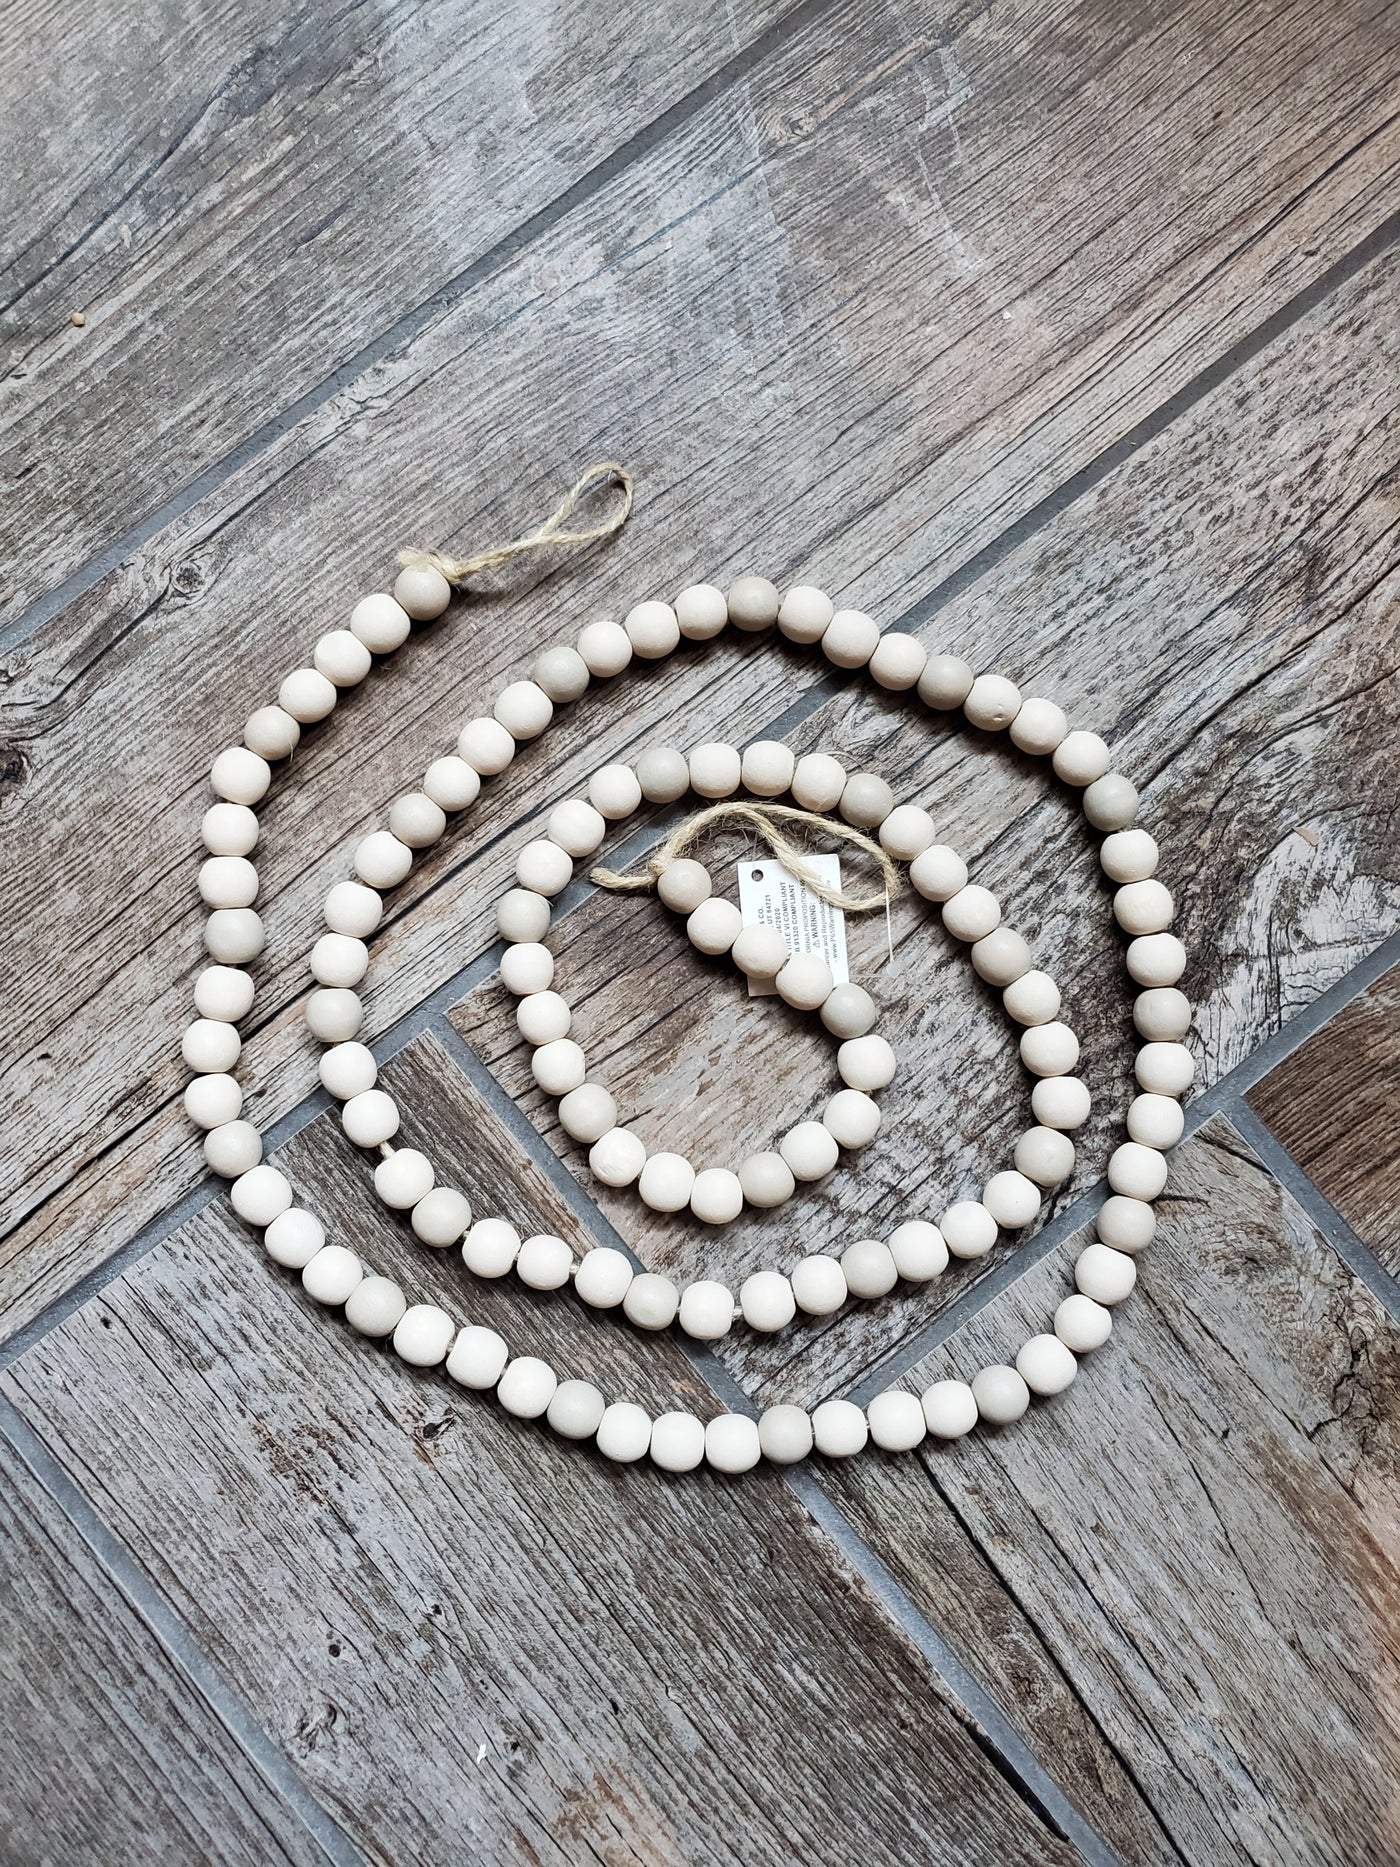 White and Tan Wood Beads